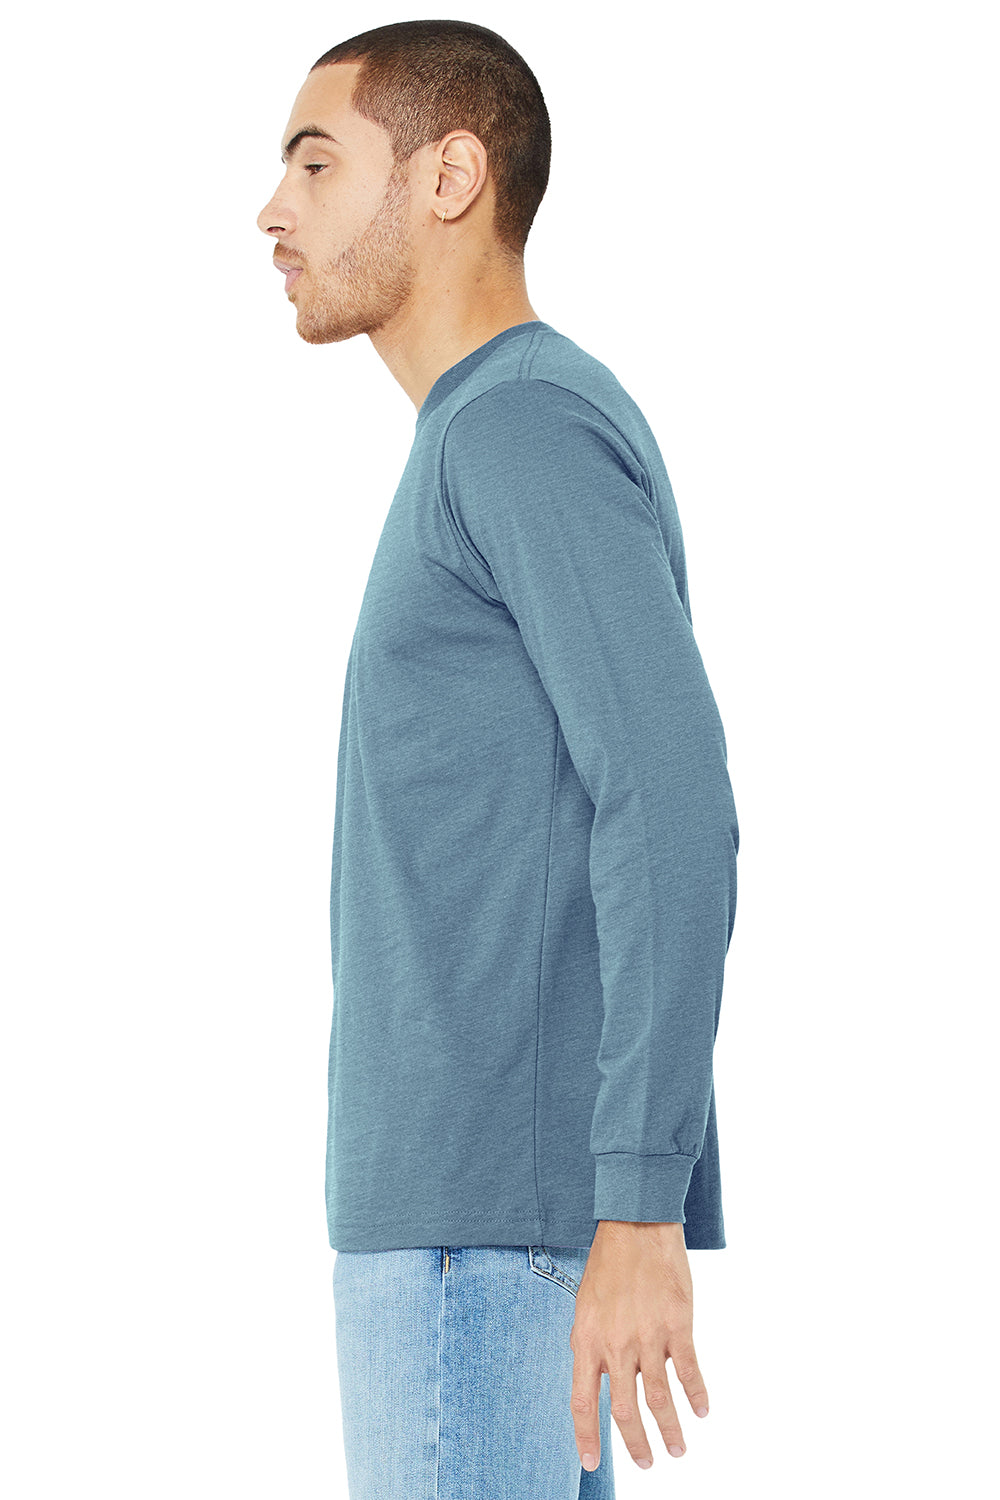 Bella + Canvas BC3501/3501 Mens Jersey Long Sleeve Crewneck T-Shirt Denim Blue Triblend Model Side